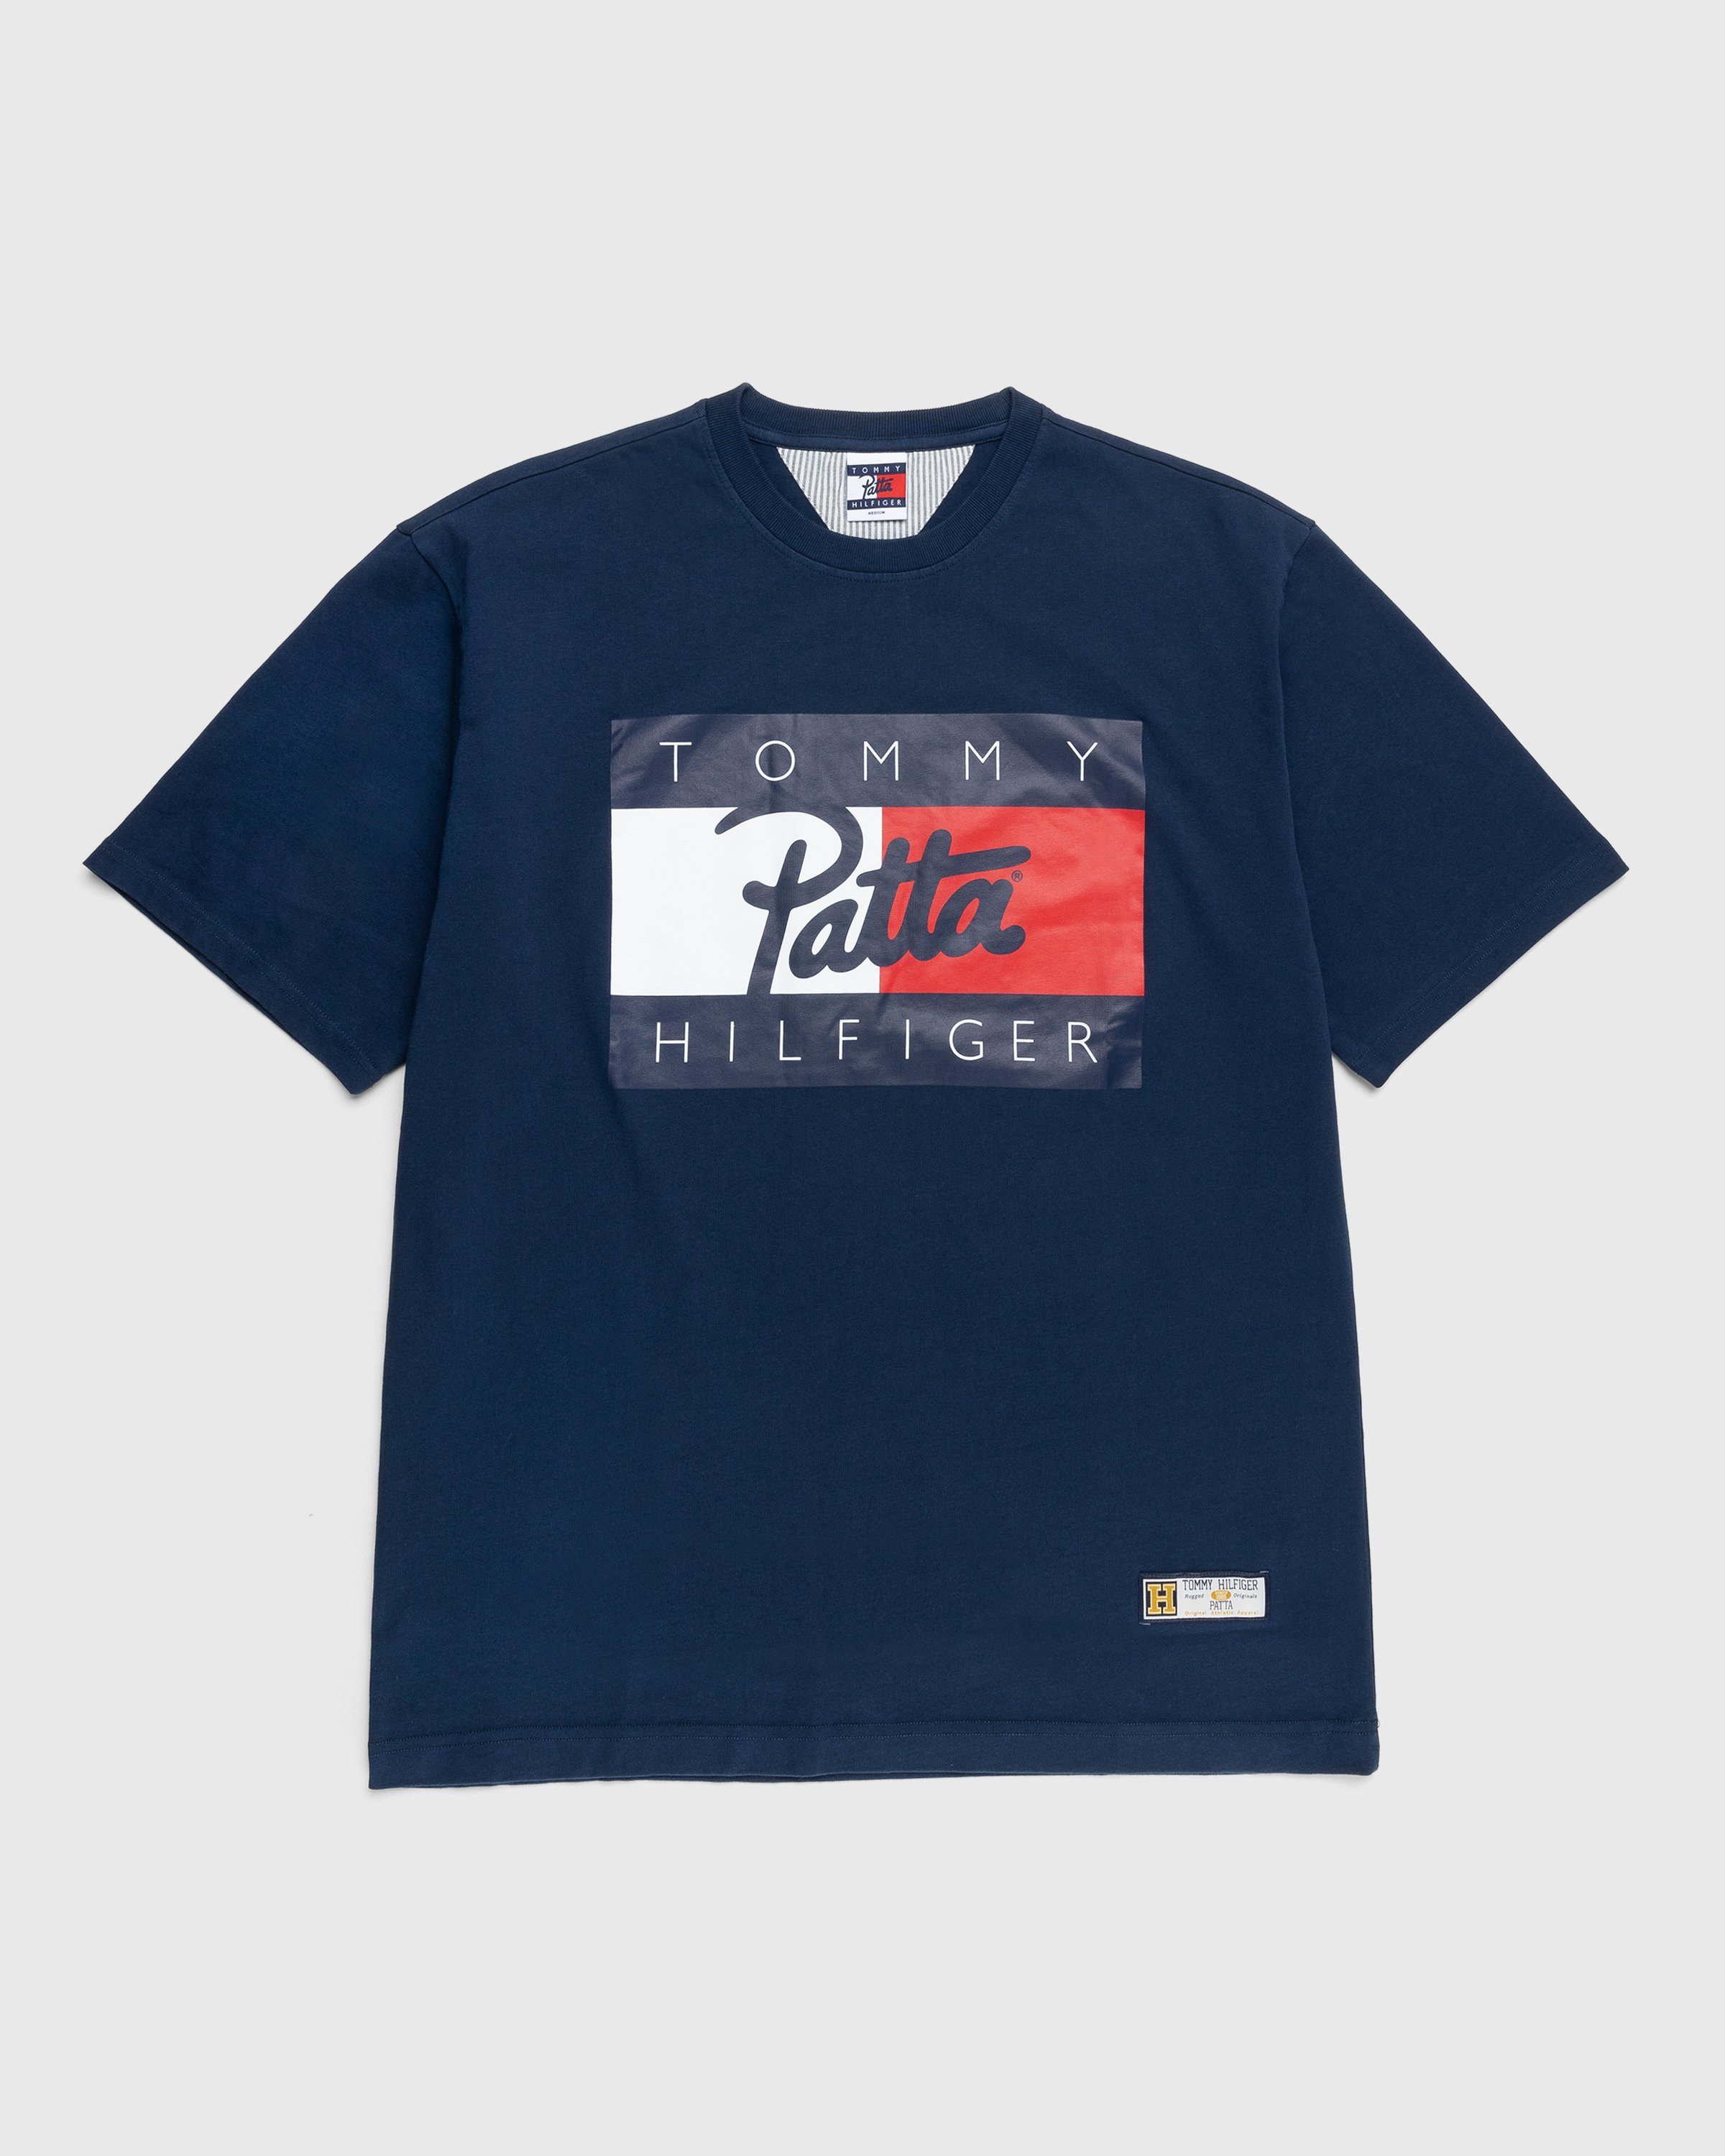 Patta x Tommy Hilfiger - T-Shirt Sport Navy - Clothing - Blue - Image 1